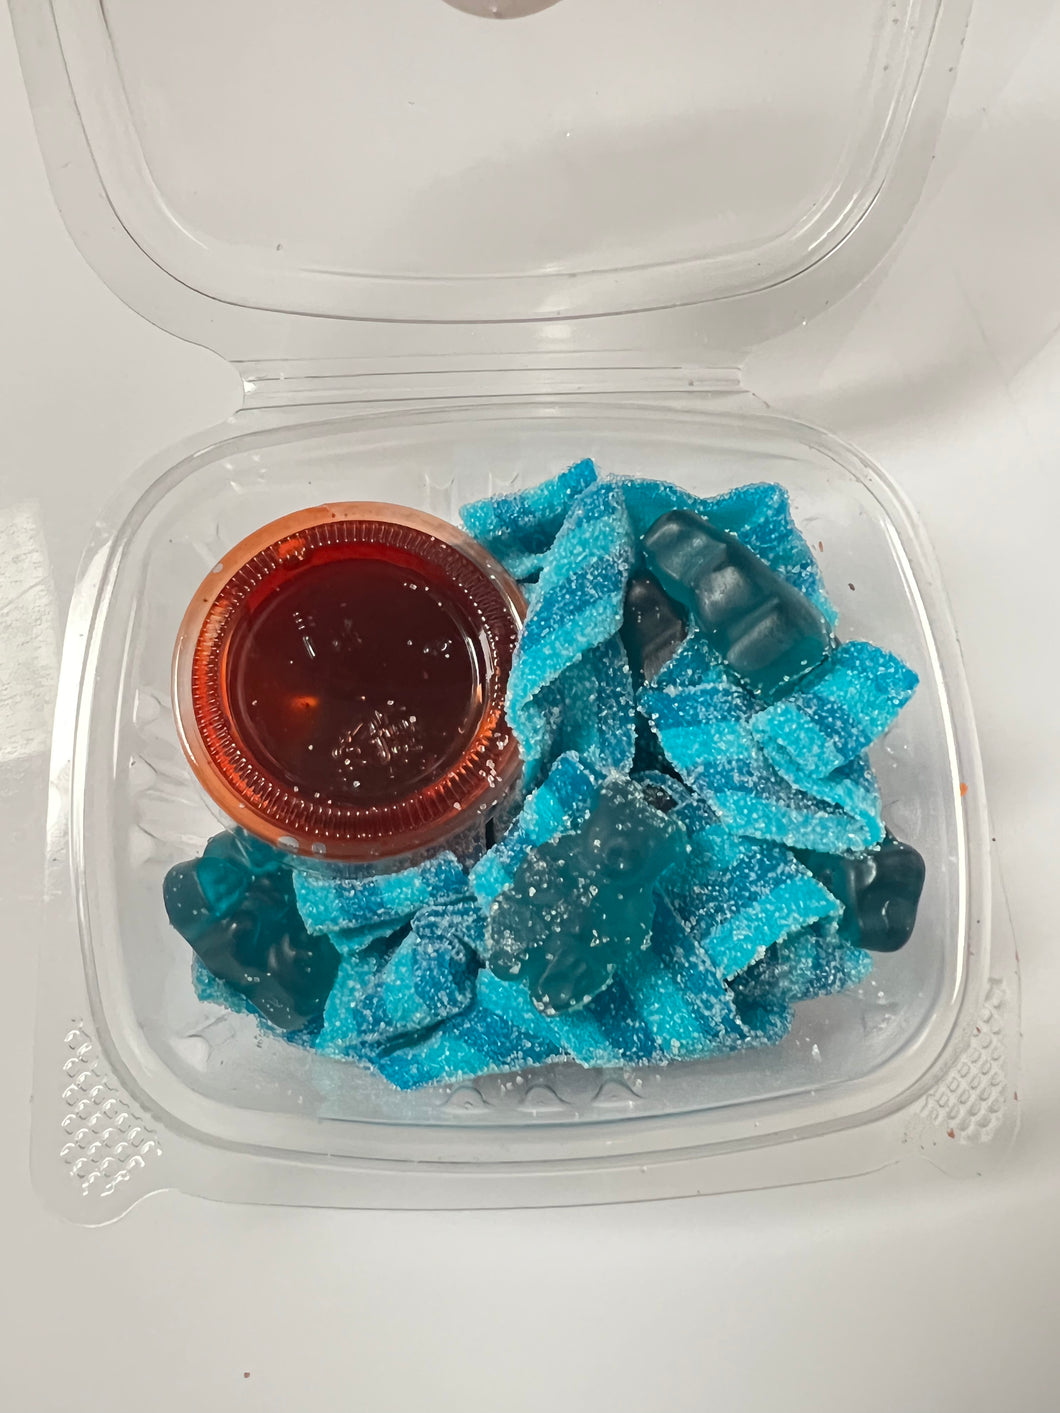 Mini blue sourbelts/gummybears with Chamoy